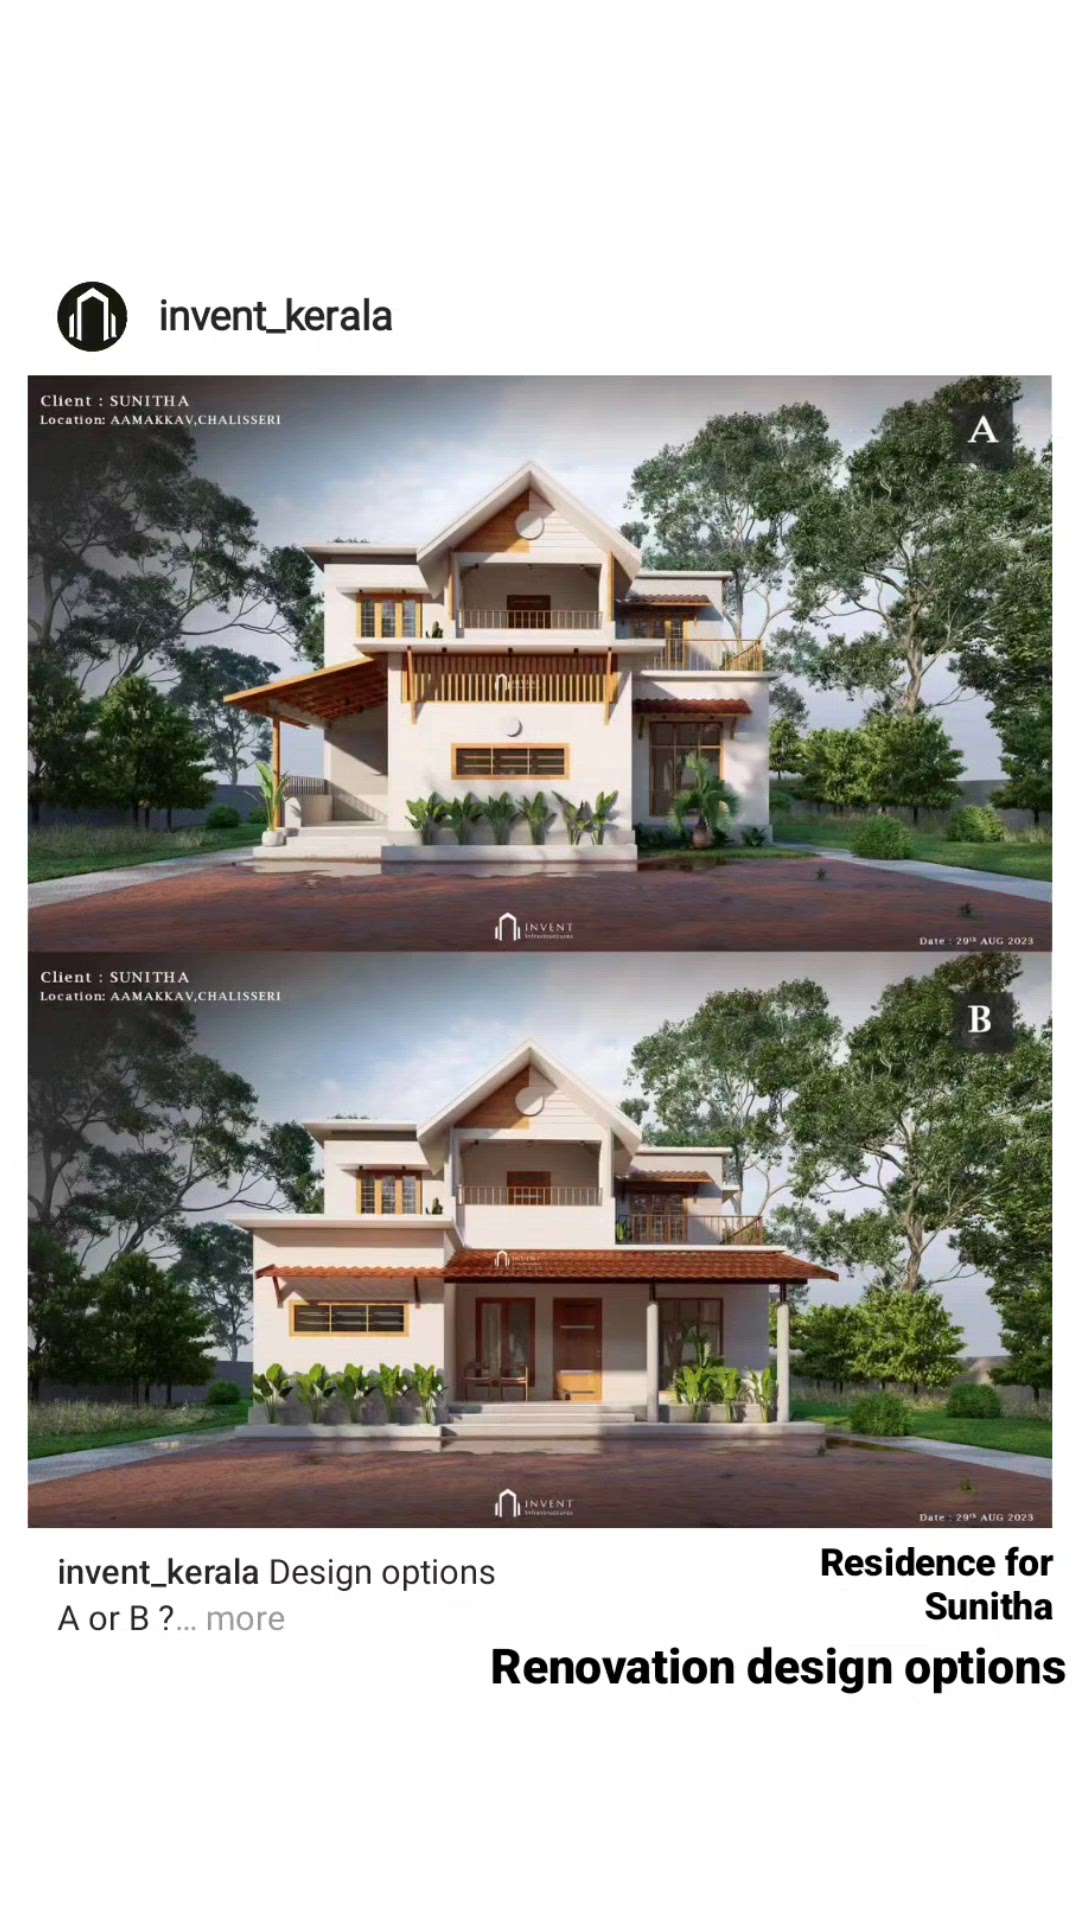 comparison

#architecture #beautiful #houses